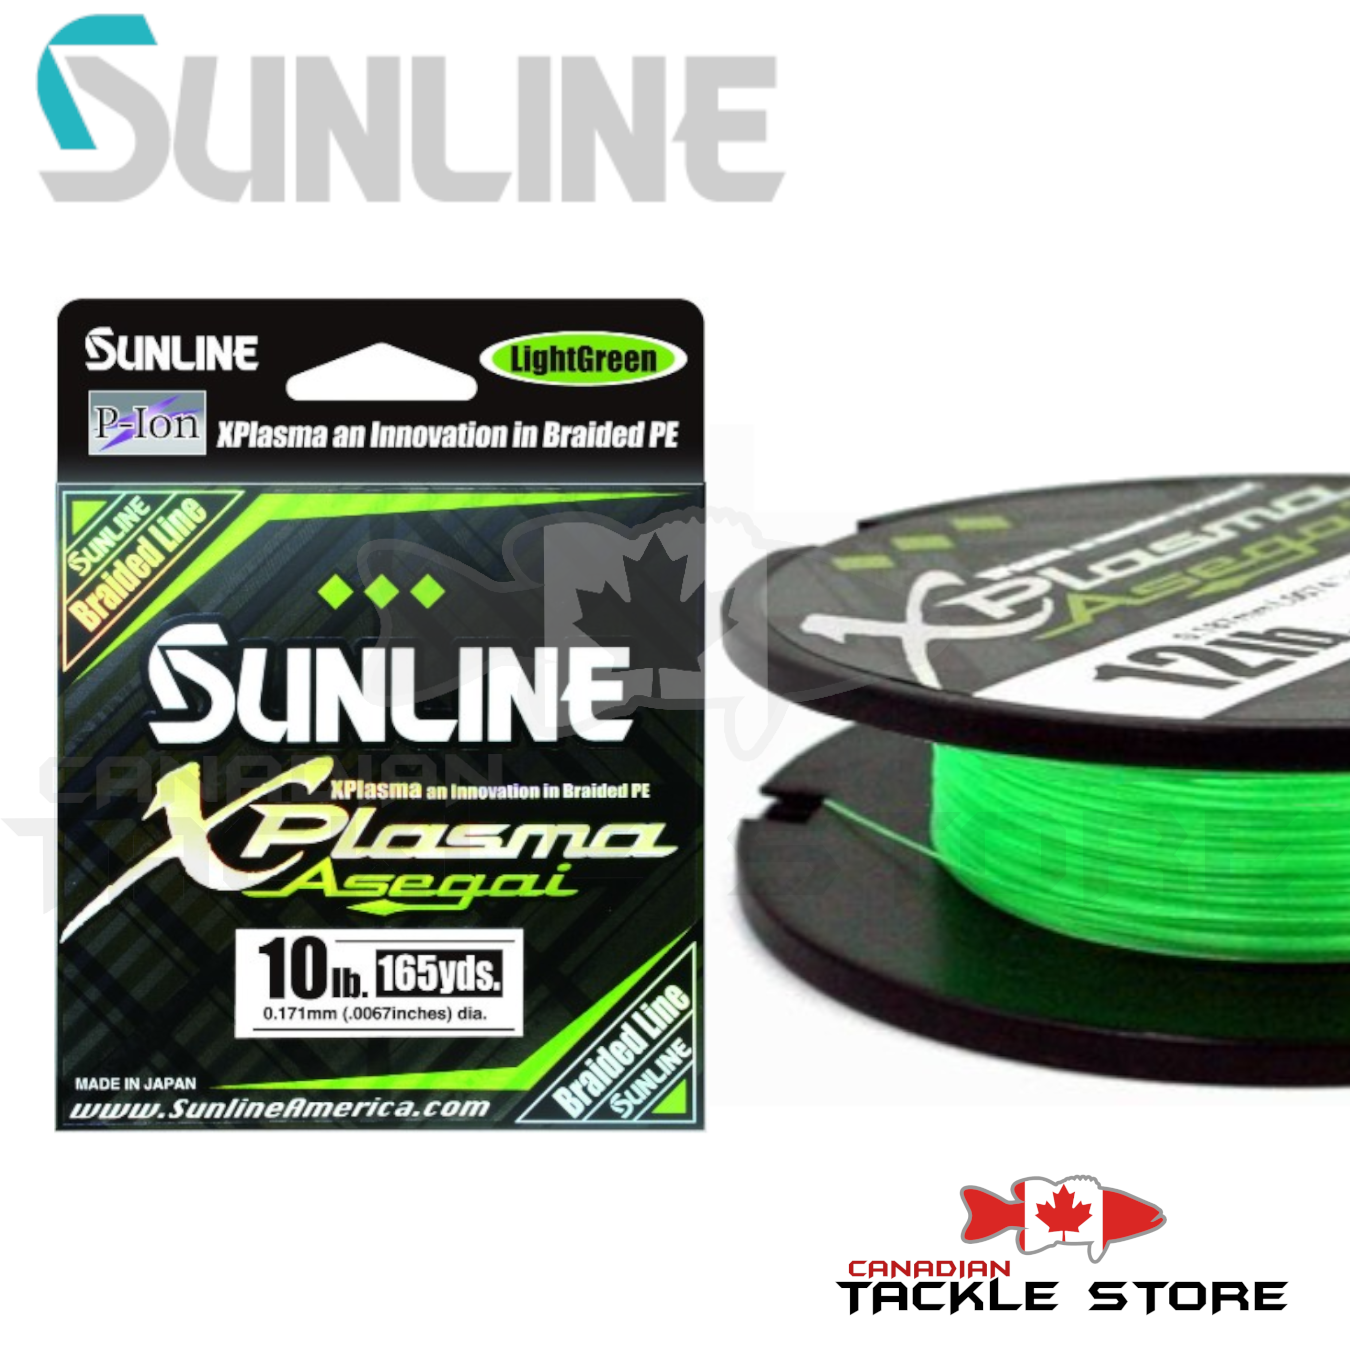 Sunline Xplasma Asegai Braided Line – Canadian Tackle Store